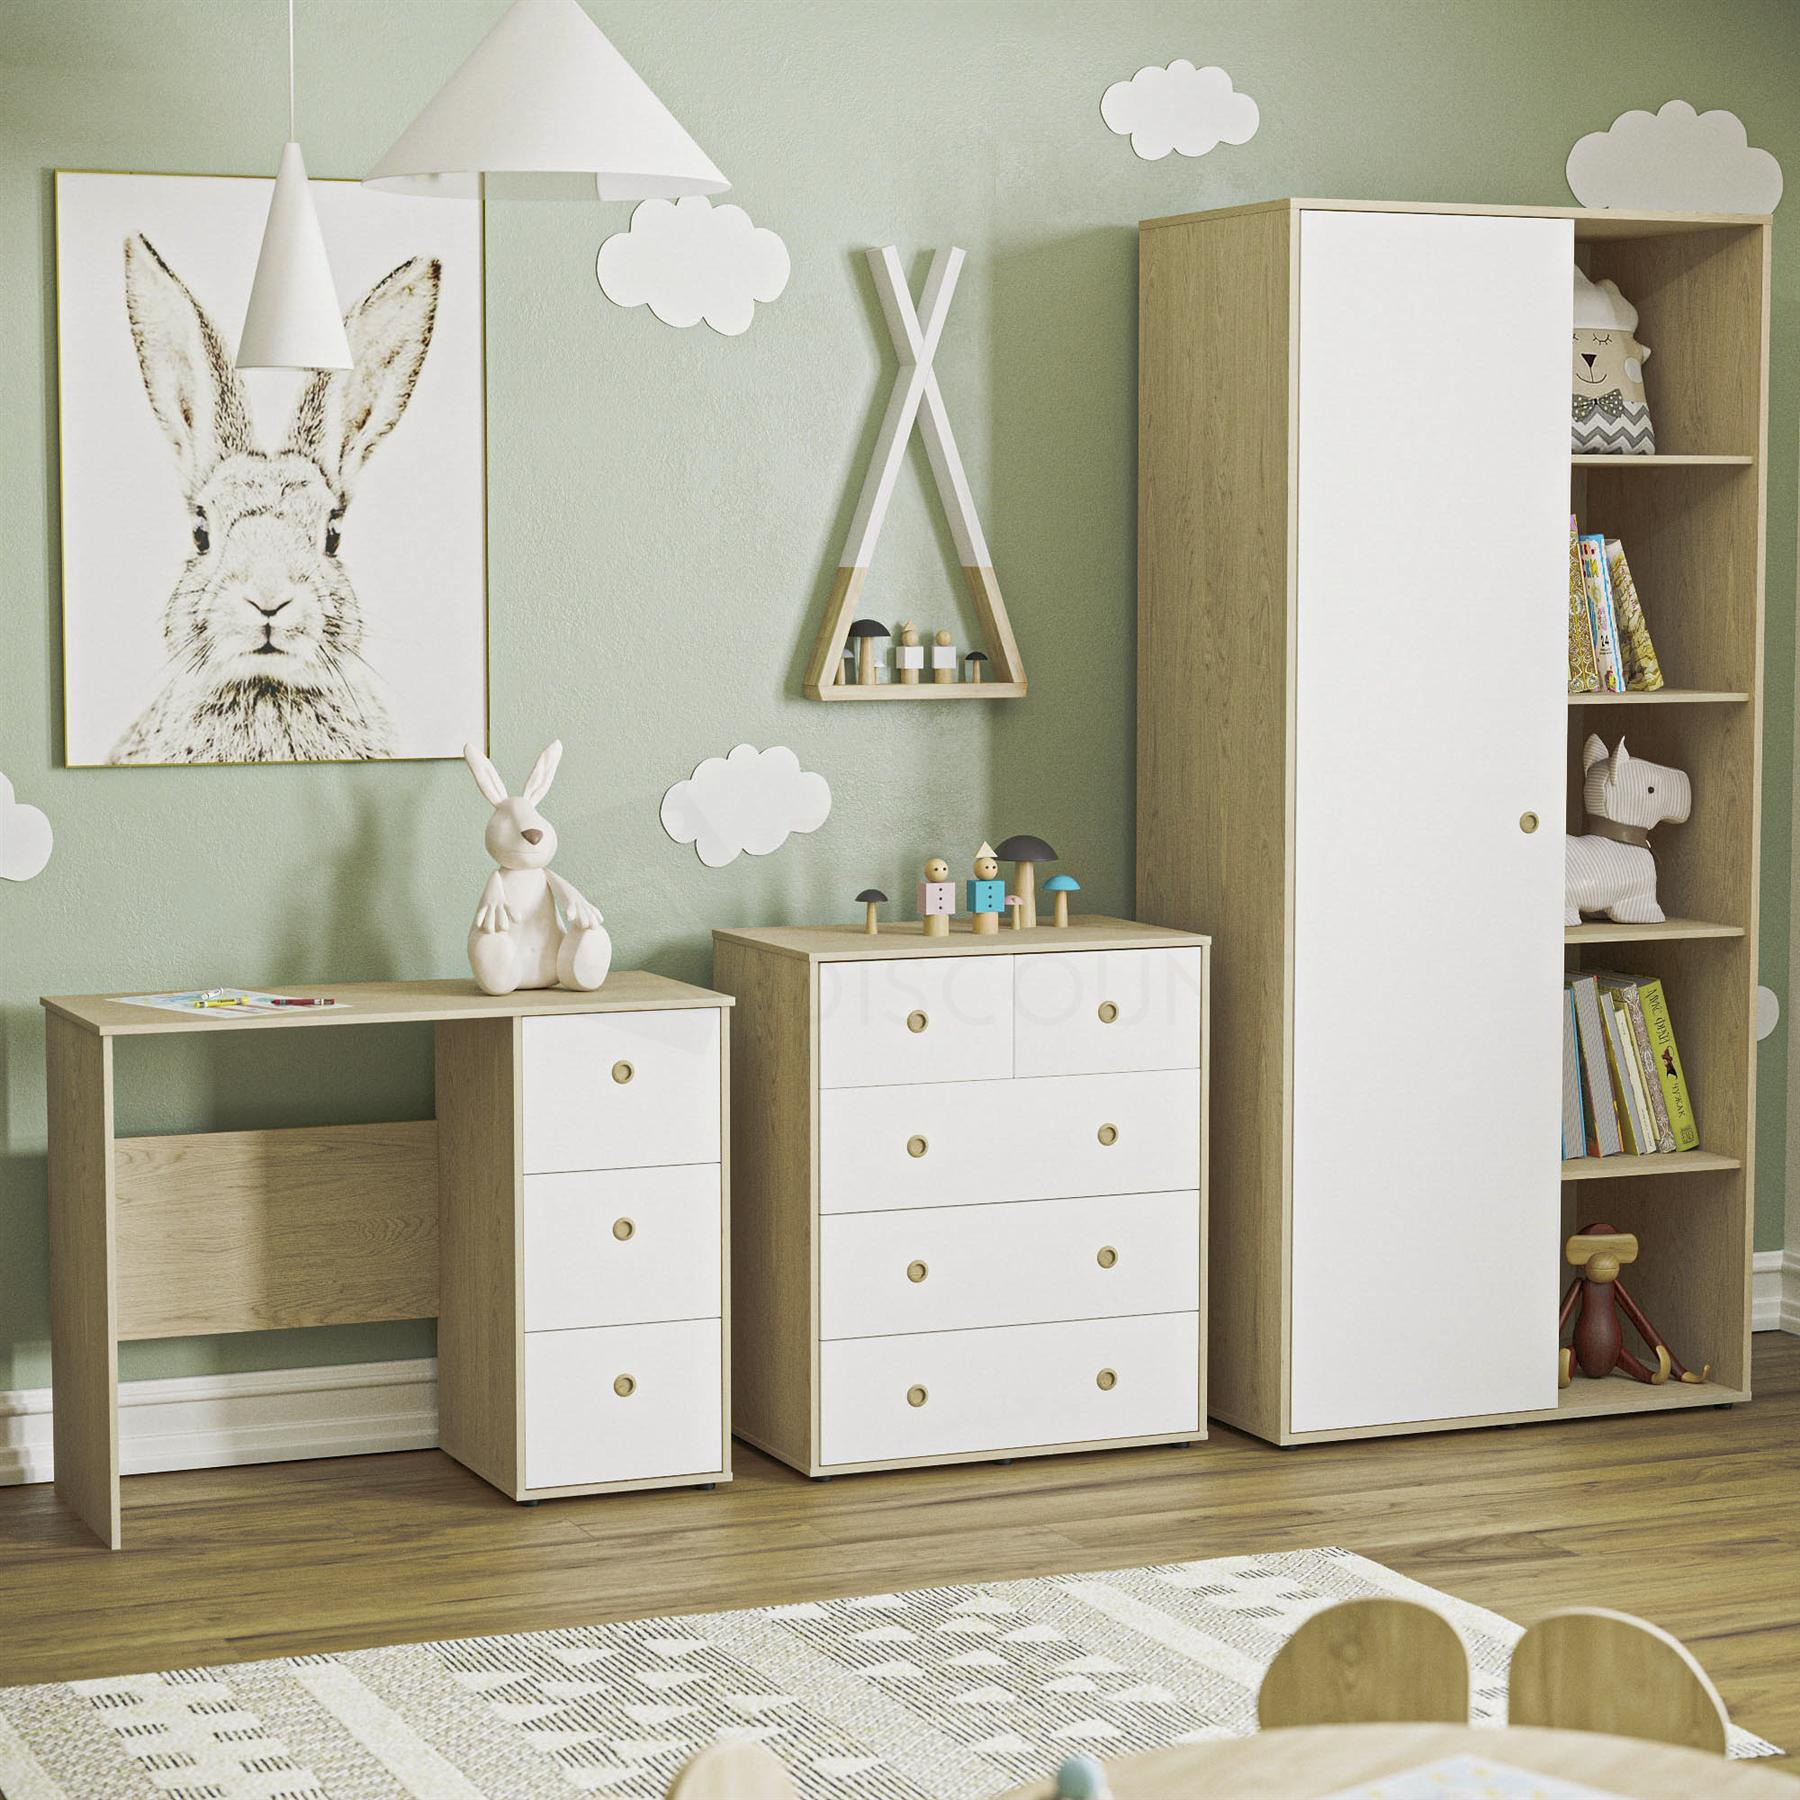 Junior Vida Neptune 3 Piece Bedroom Set Storage Furniture (Desk, Drawer Chest, Wardrobe) - image 1